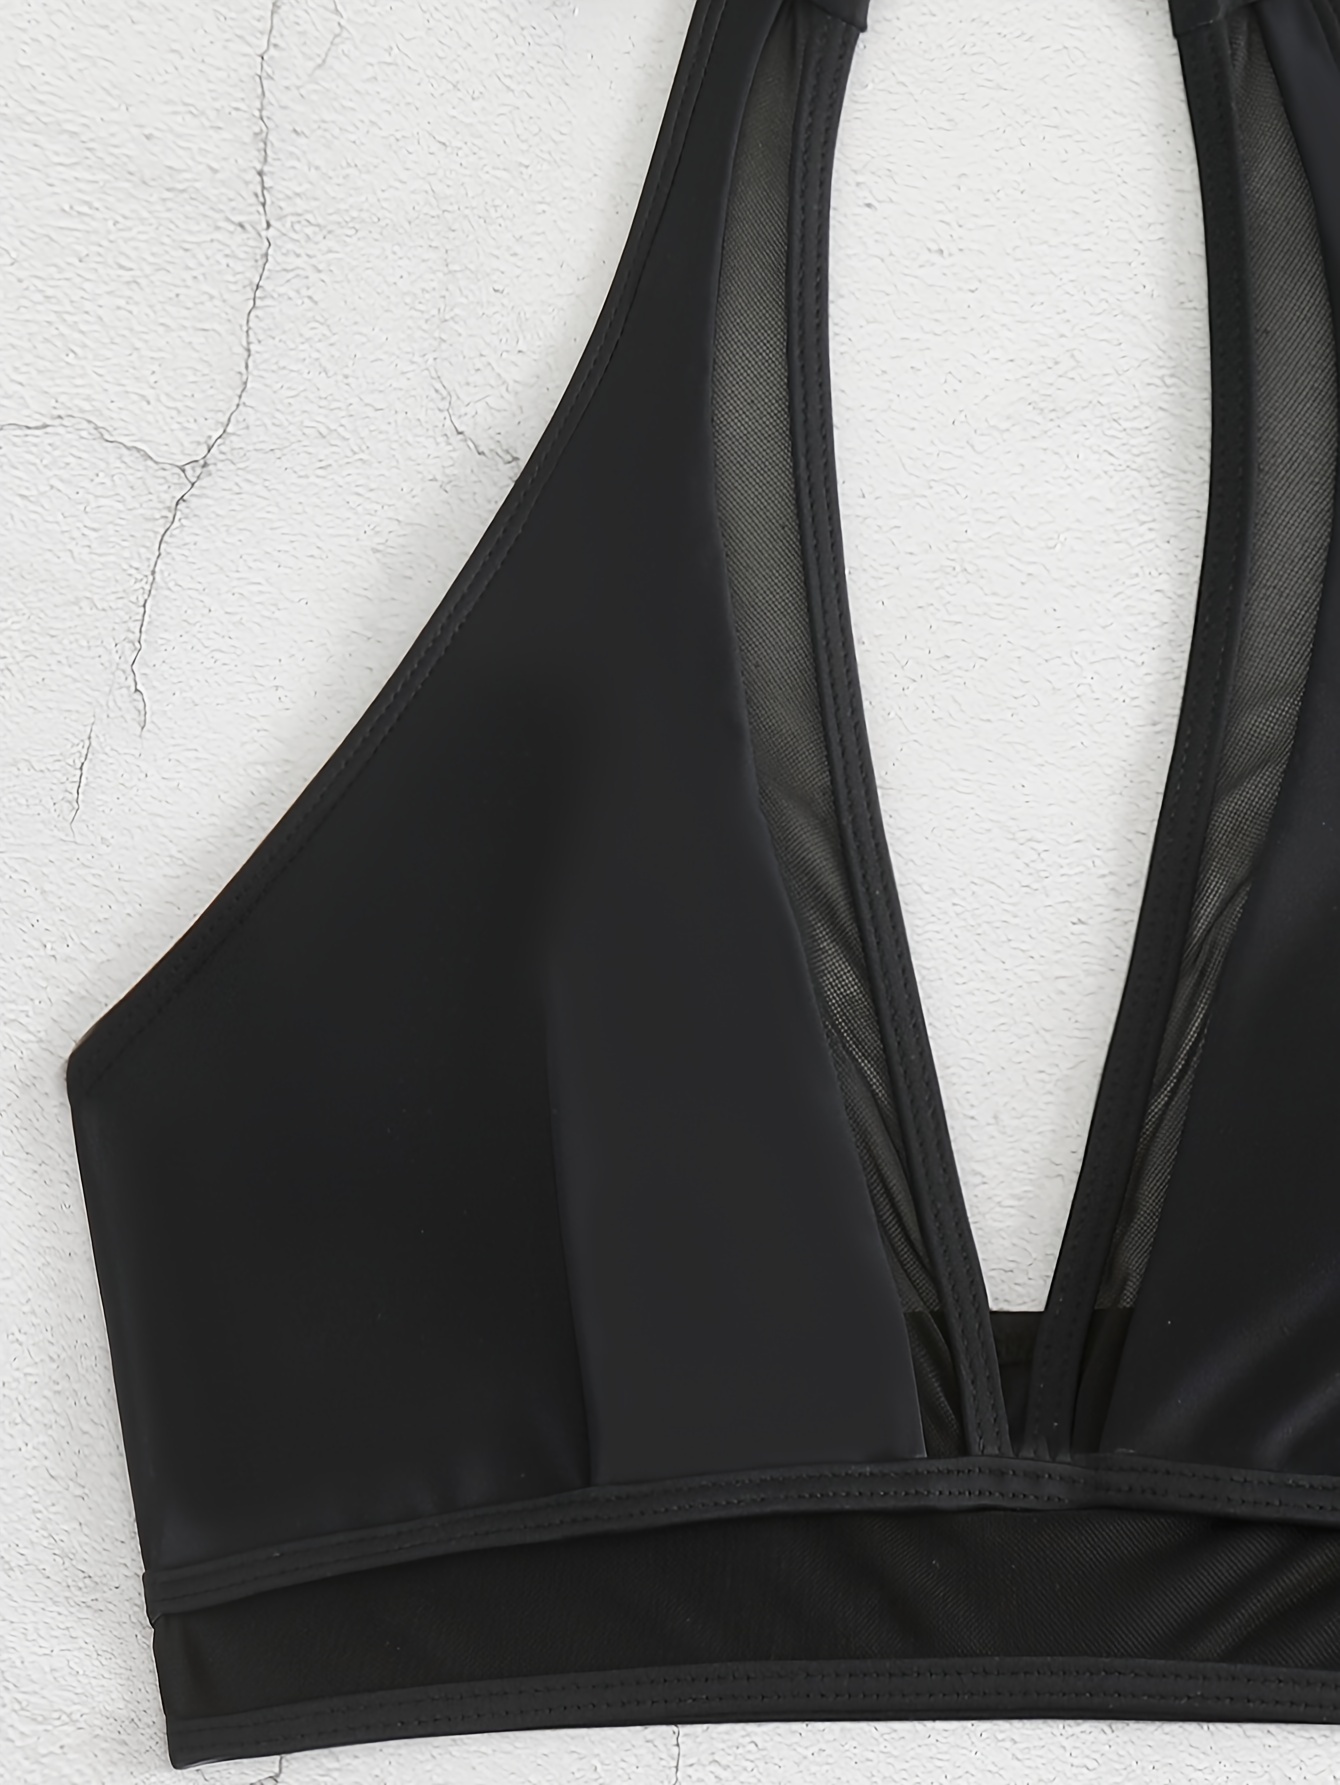 Mossimo Black Mesh High Neck Halter Bikini 2-Pc Set Swimwear Women's M,XL  #1824